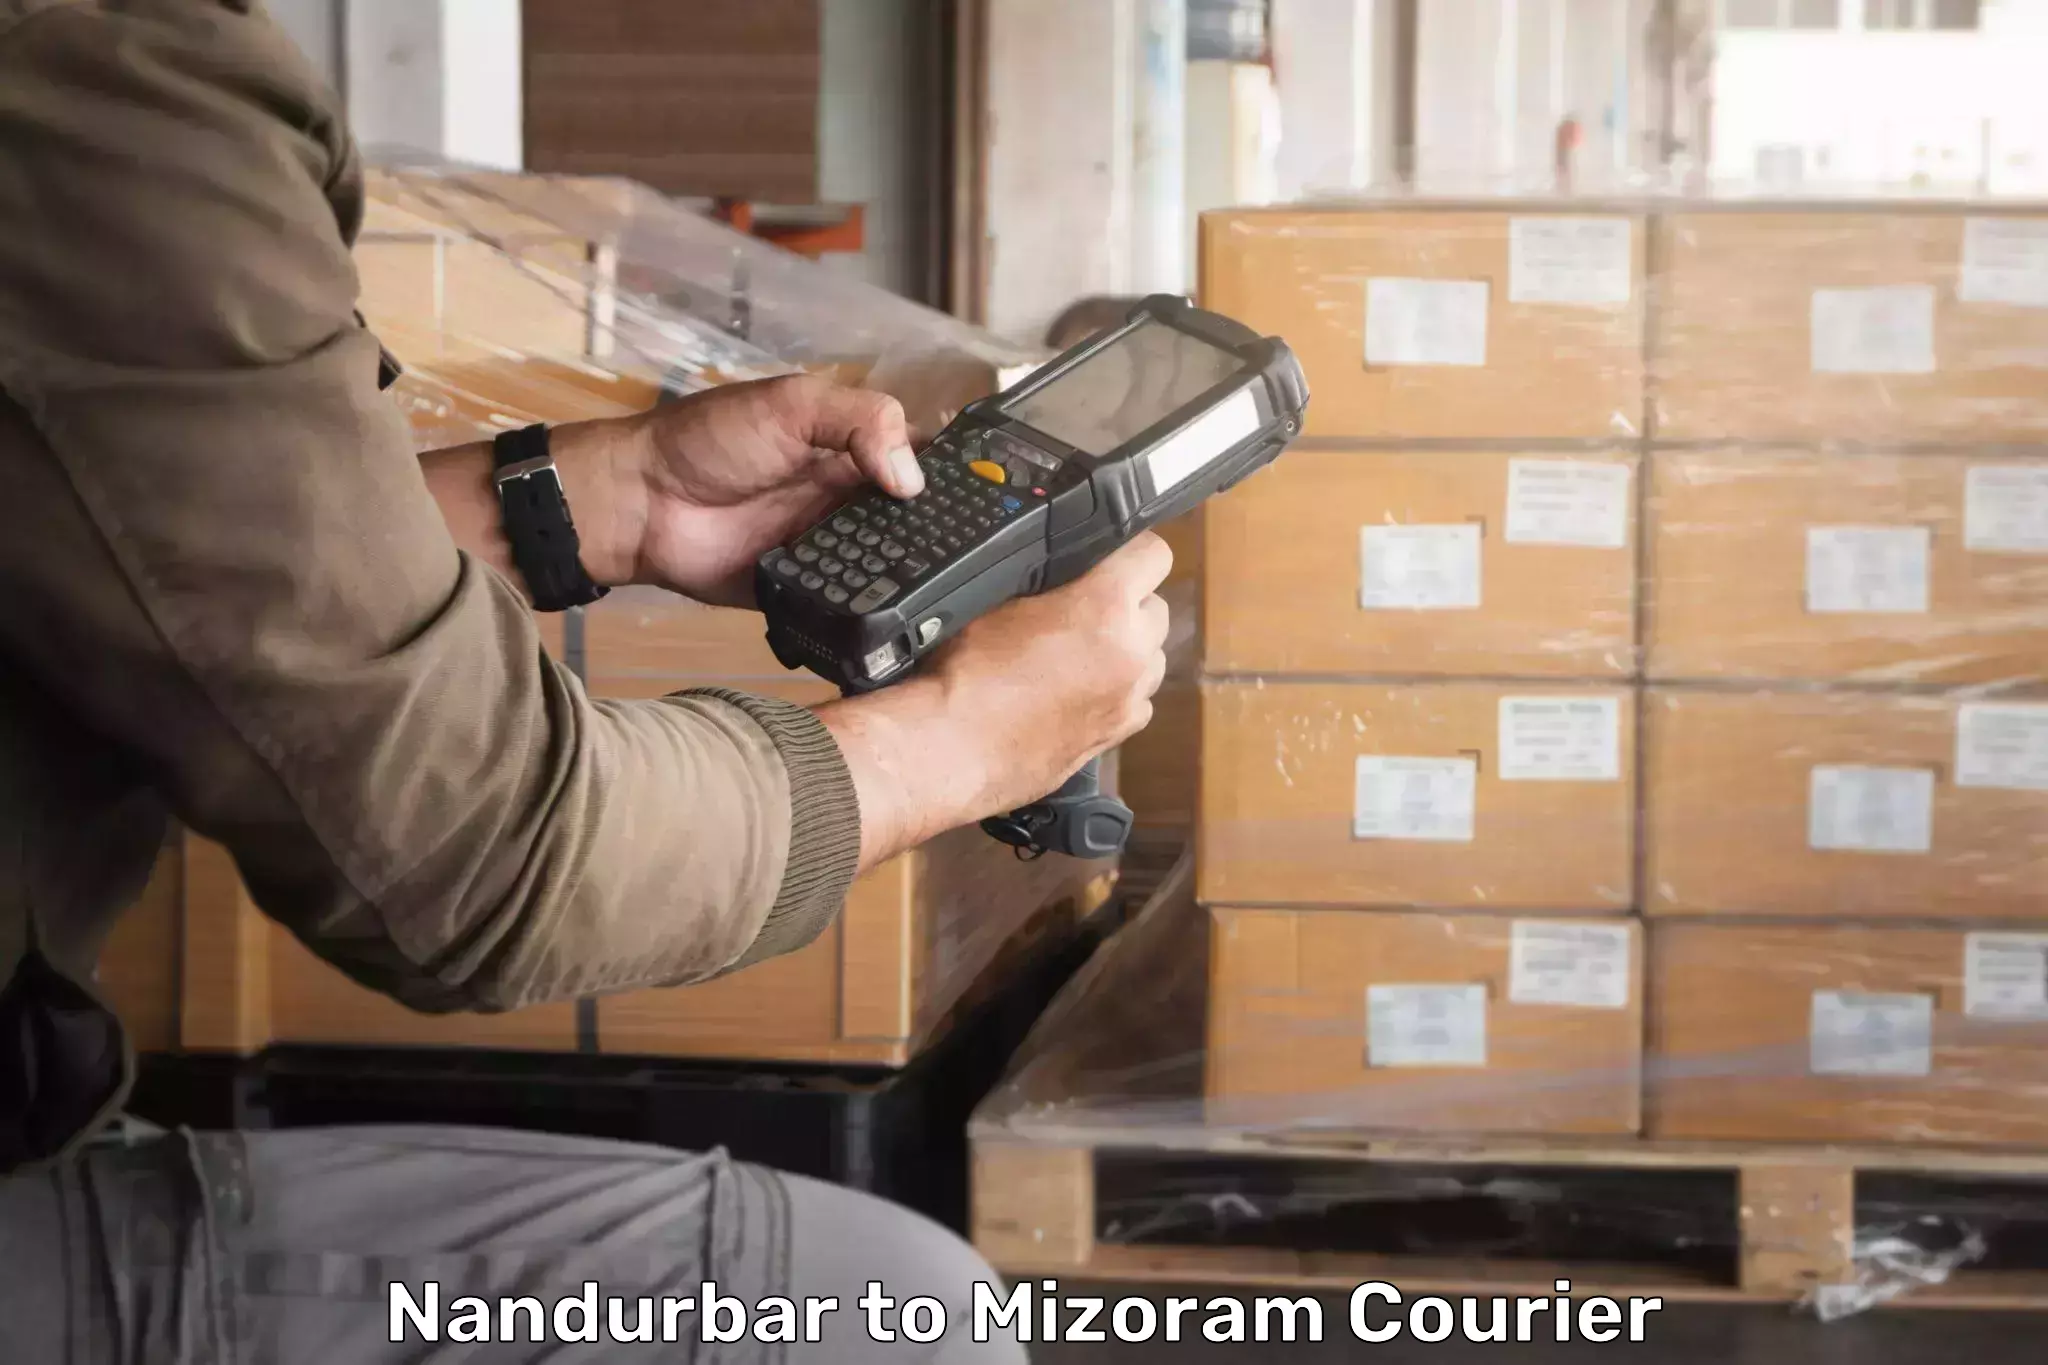 Advanced delivery network Nandurbar to Darlawn